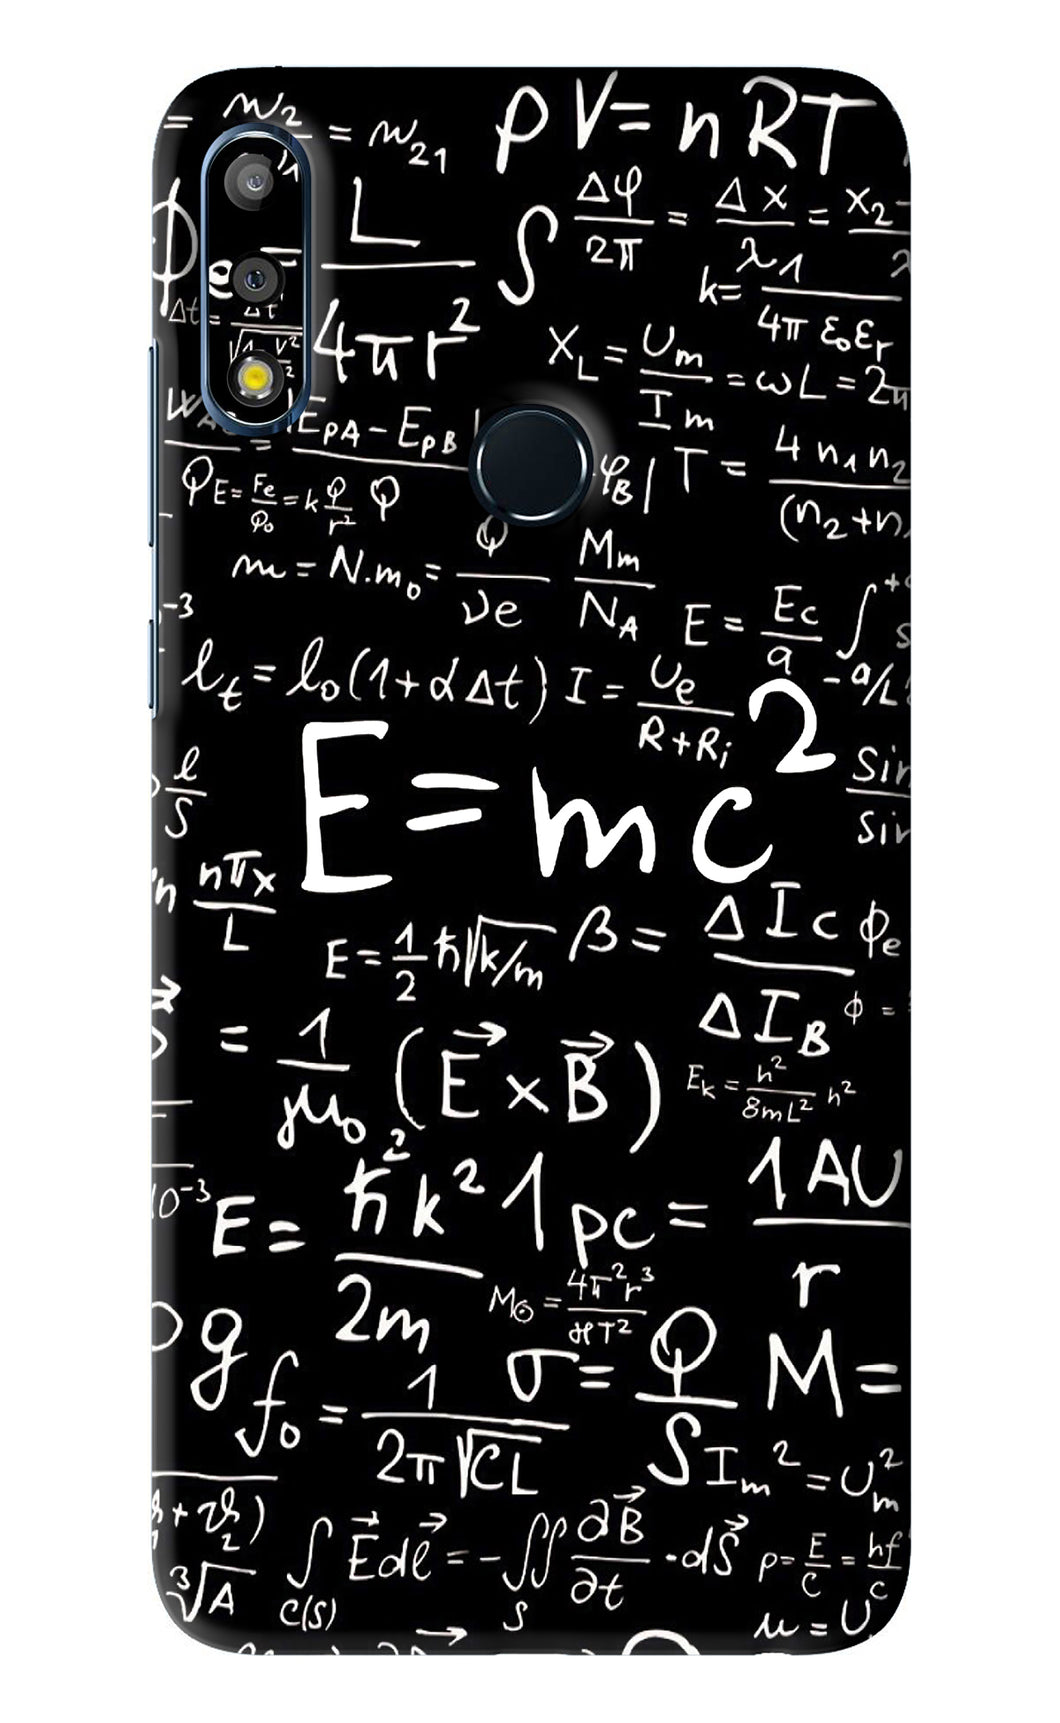 Physics Albert Einstein Formula Asus Zenfone Max Pro M2 Back Skin Wrap